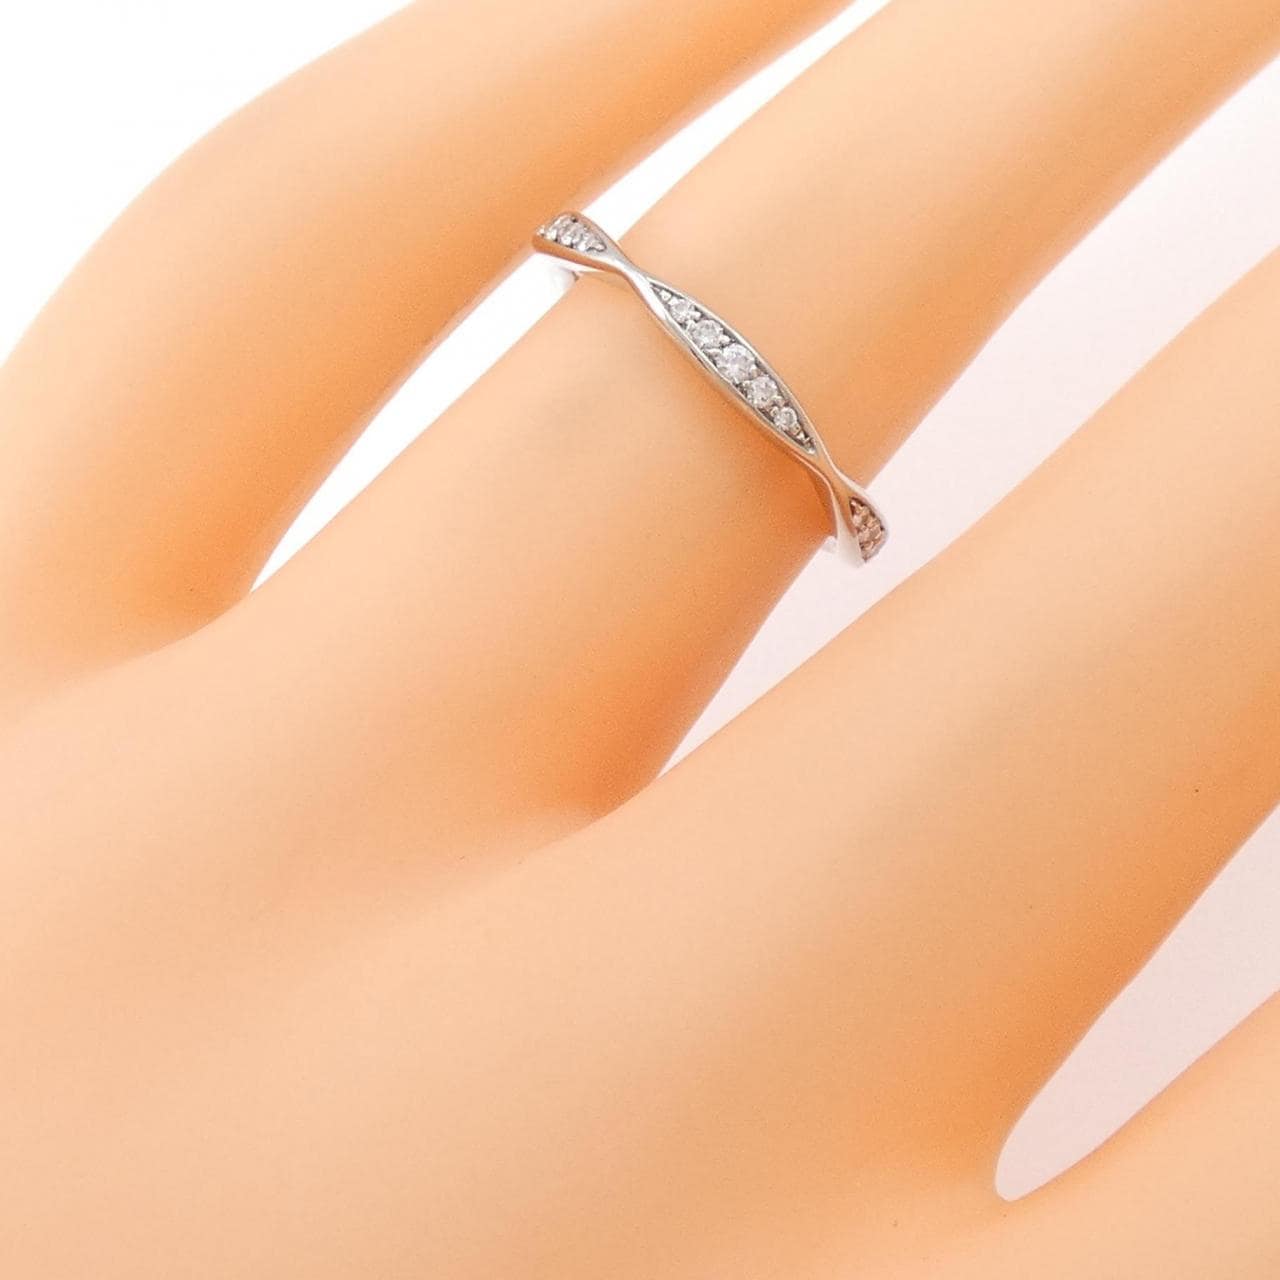 CHANEL camellia full diamond ring